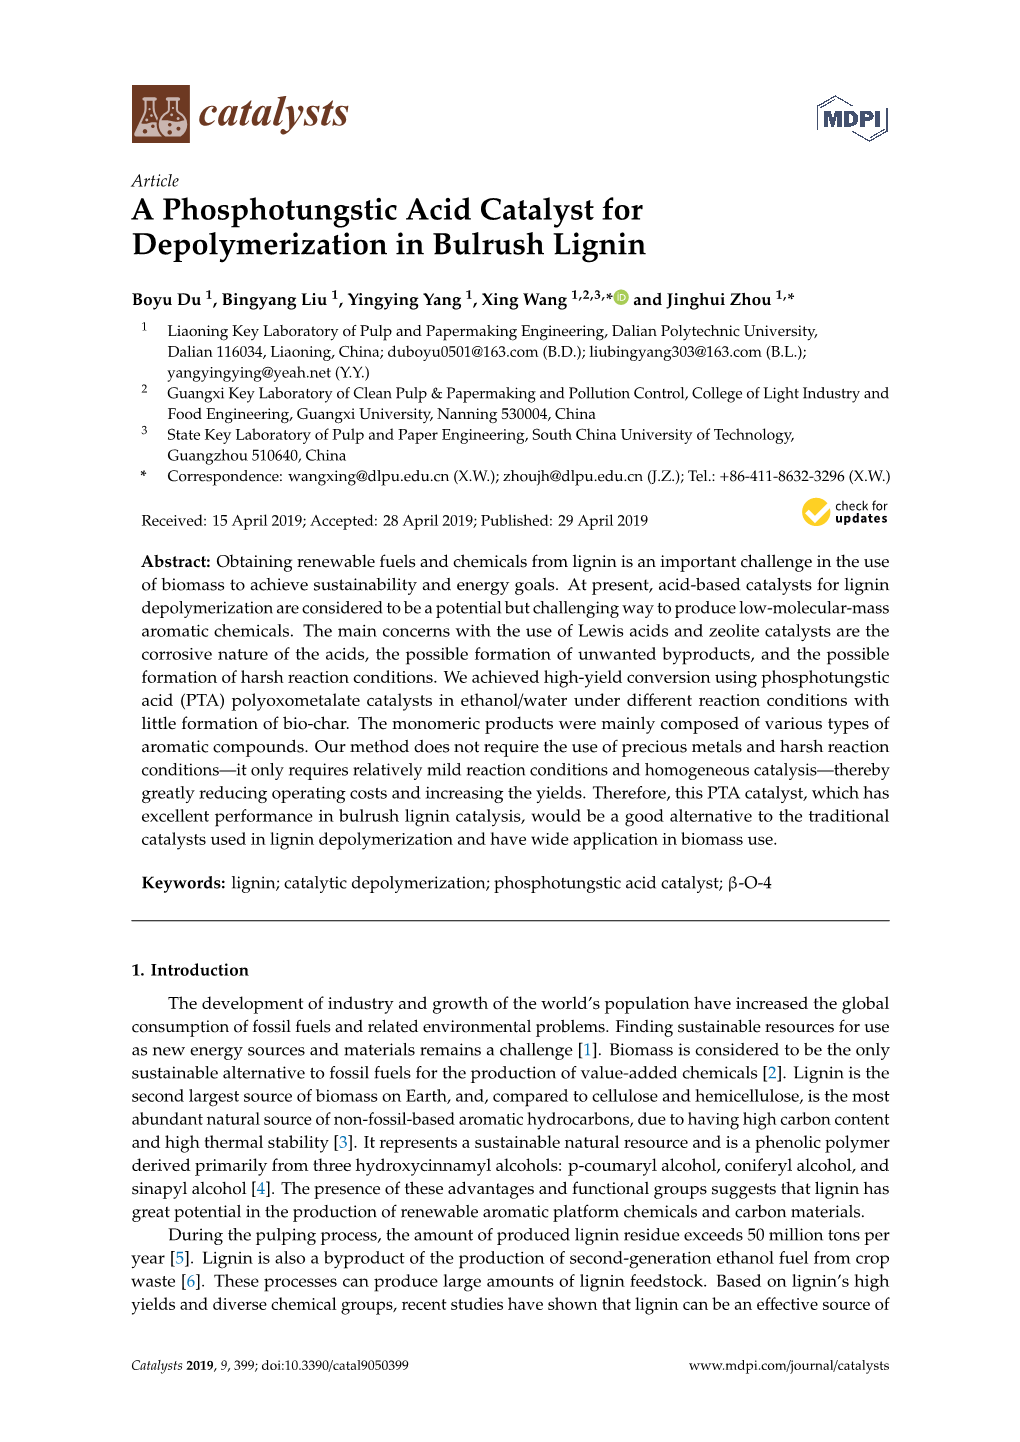 A Phosphotungstic Acid Catalyst for Depolymerization in Bulrush Lignin